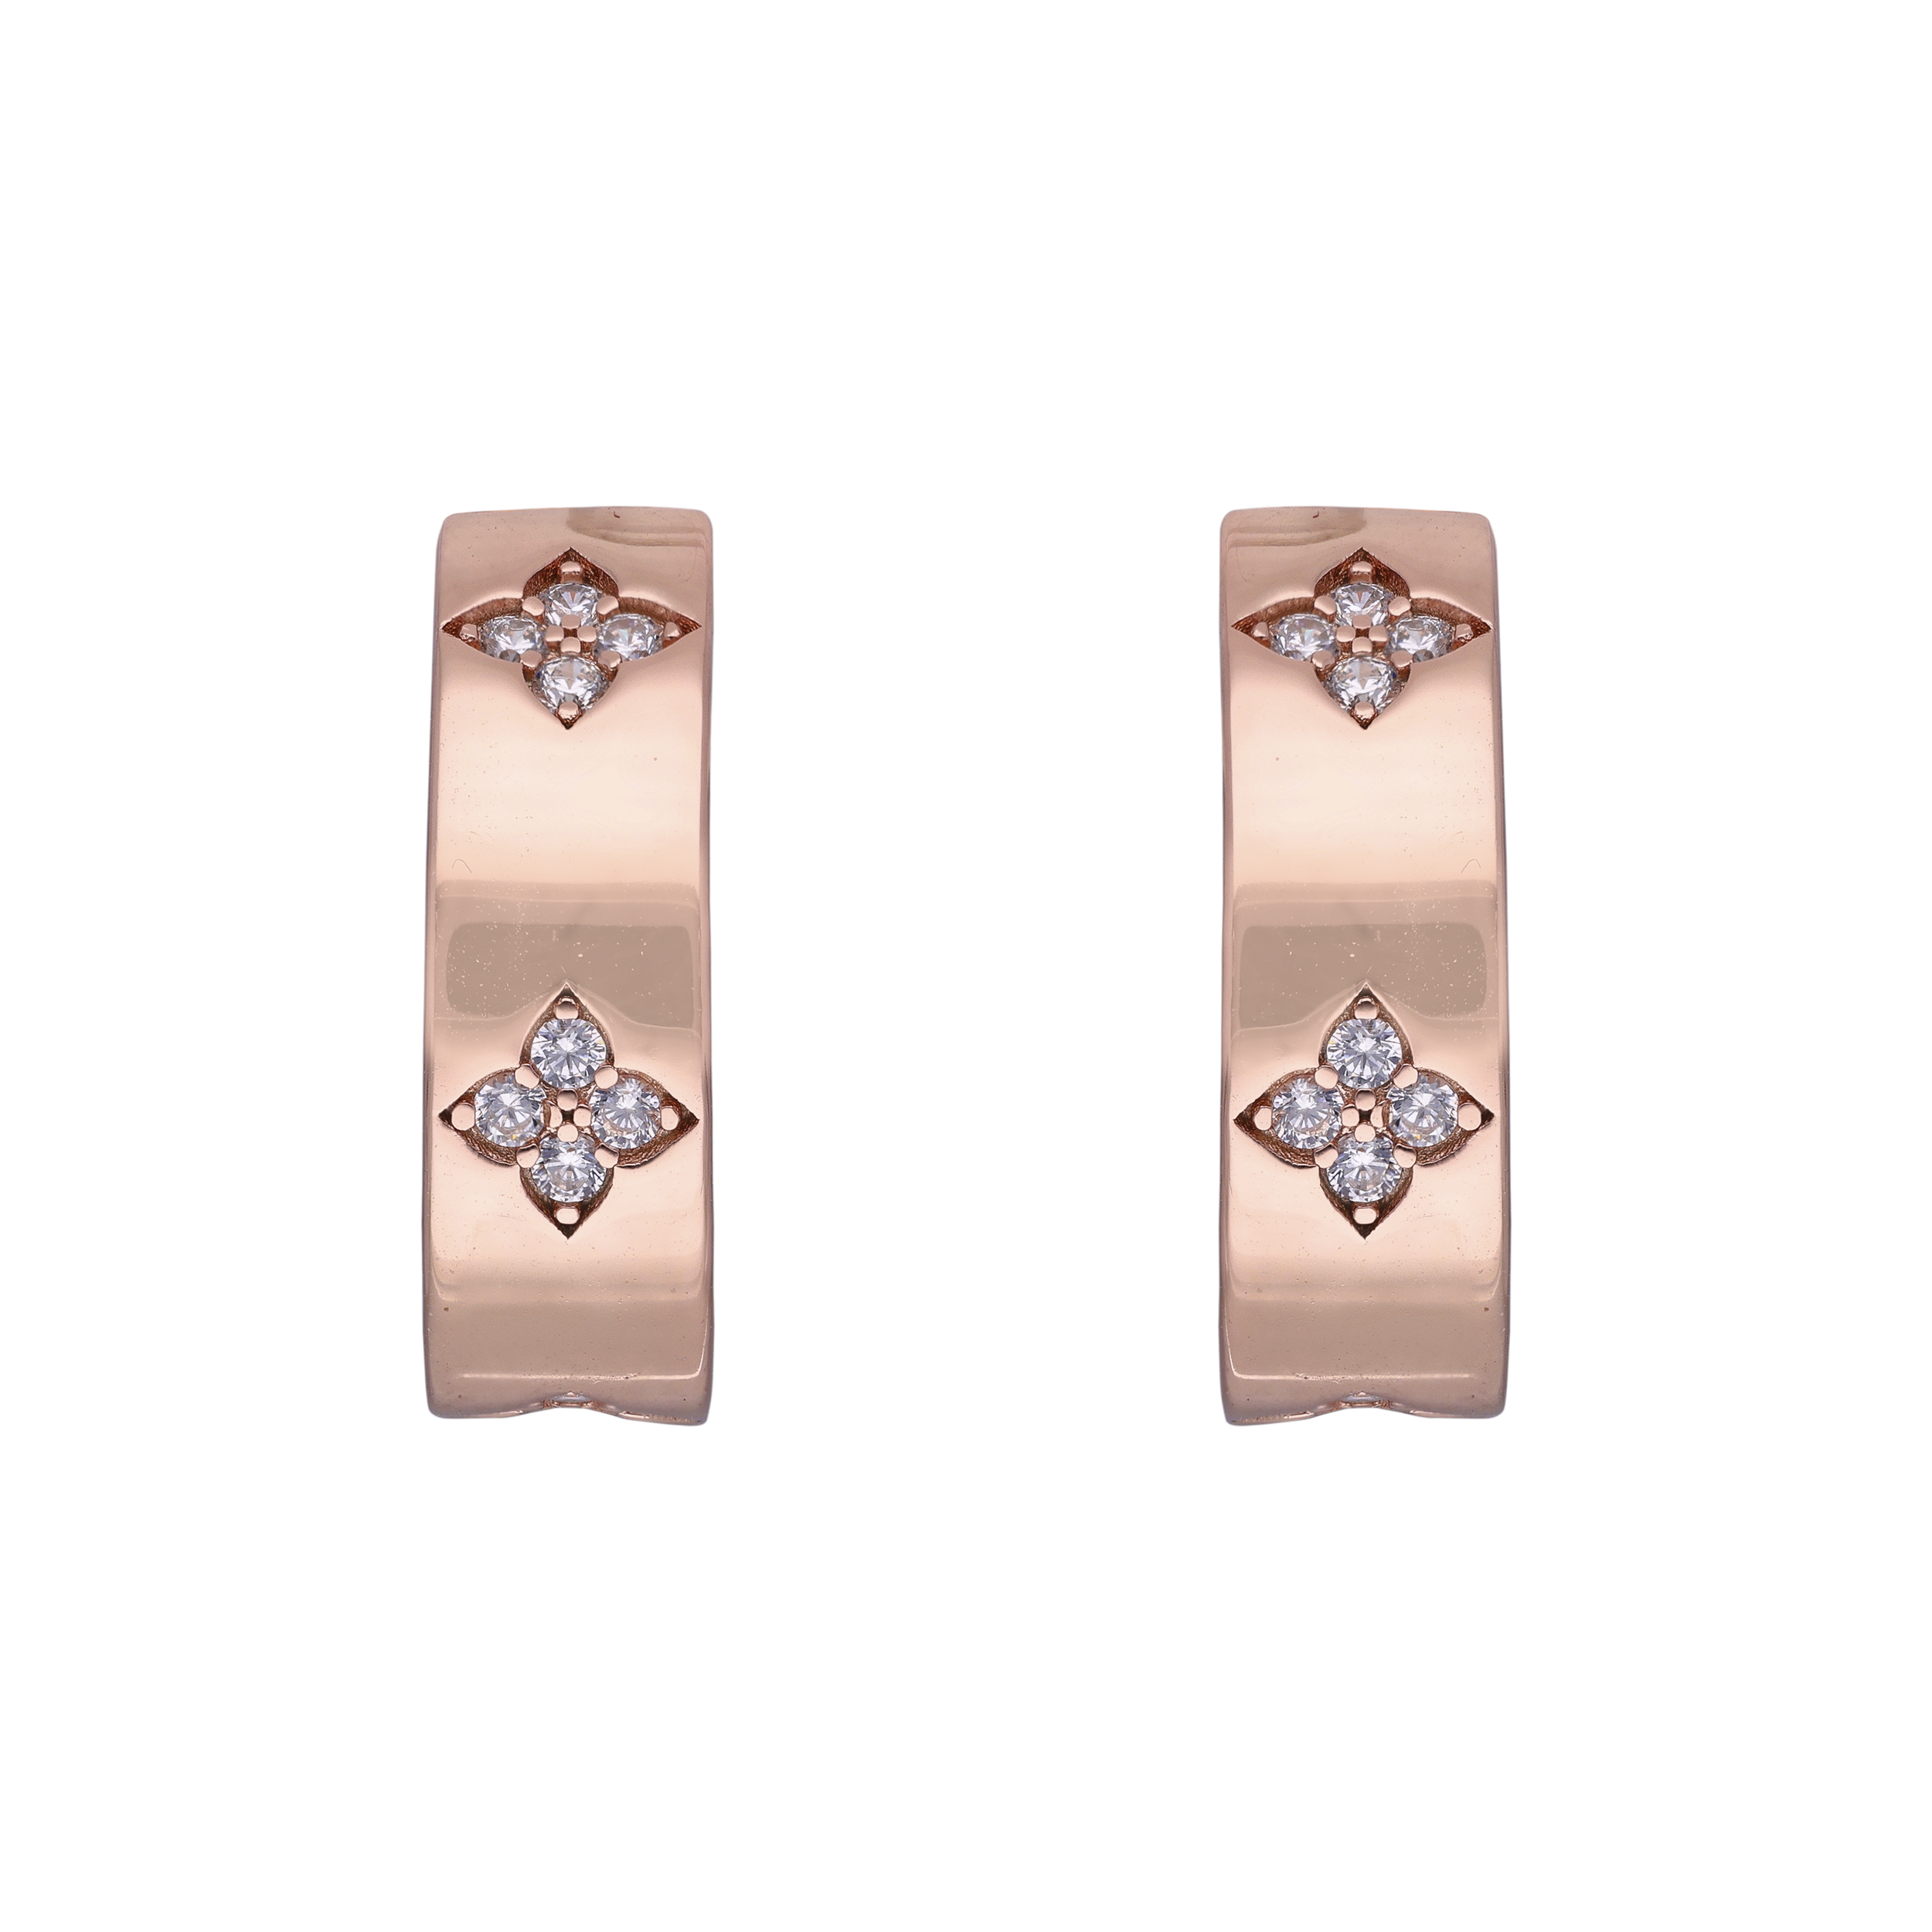 Sparkling Cubic Zirconia Sterling Silver Ear Hoops | SKU : 0019889290, 0019889313, 0019889320, 0003112687, 0003112380